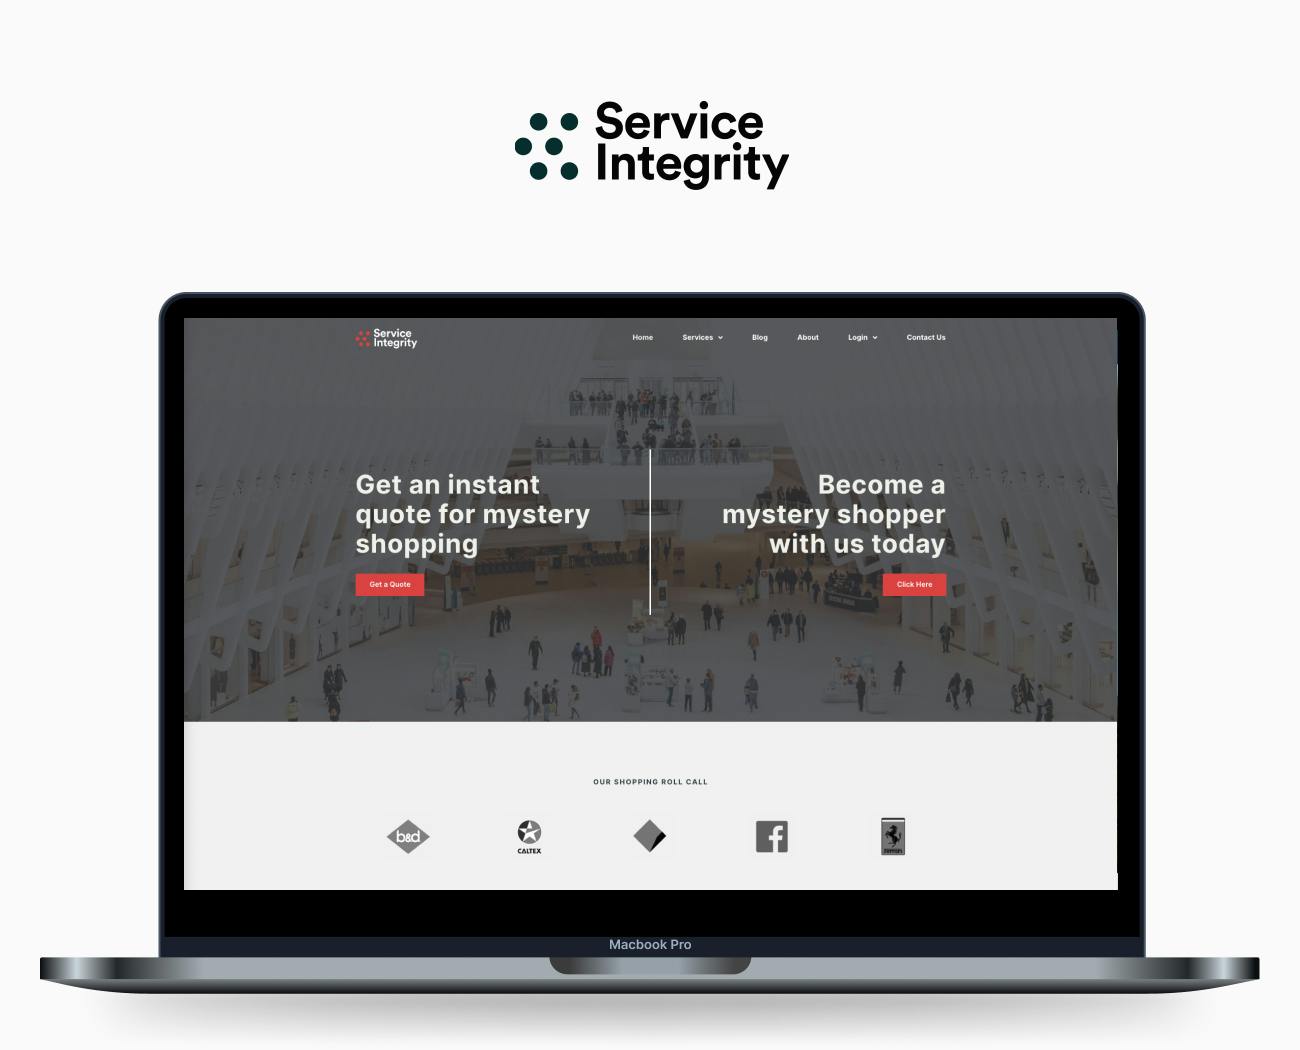 Service Integrity - Custom Build based on the provided web design by WebKingdom